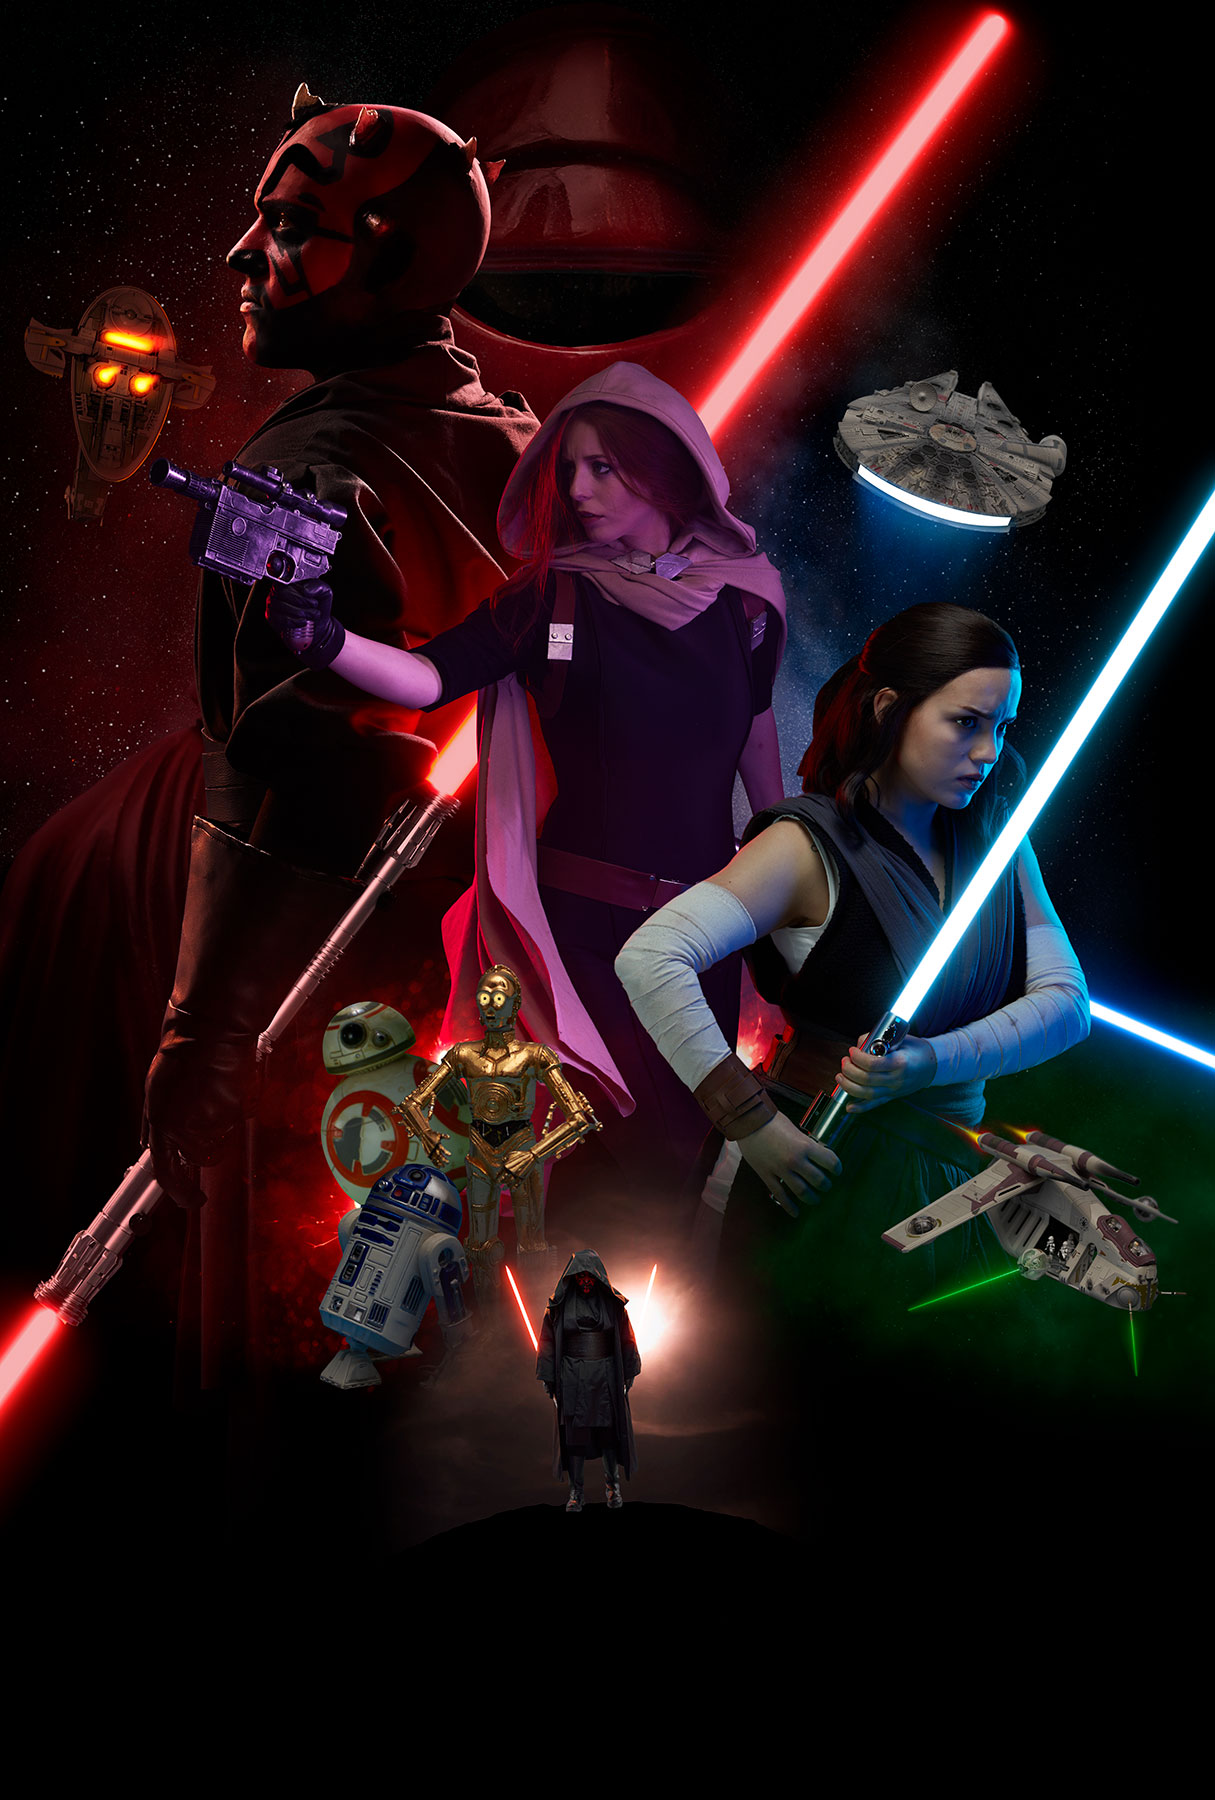 Sayanoff Arthur Star Wars Poster 02 06